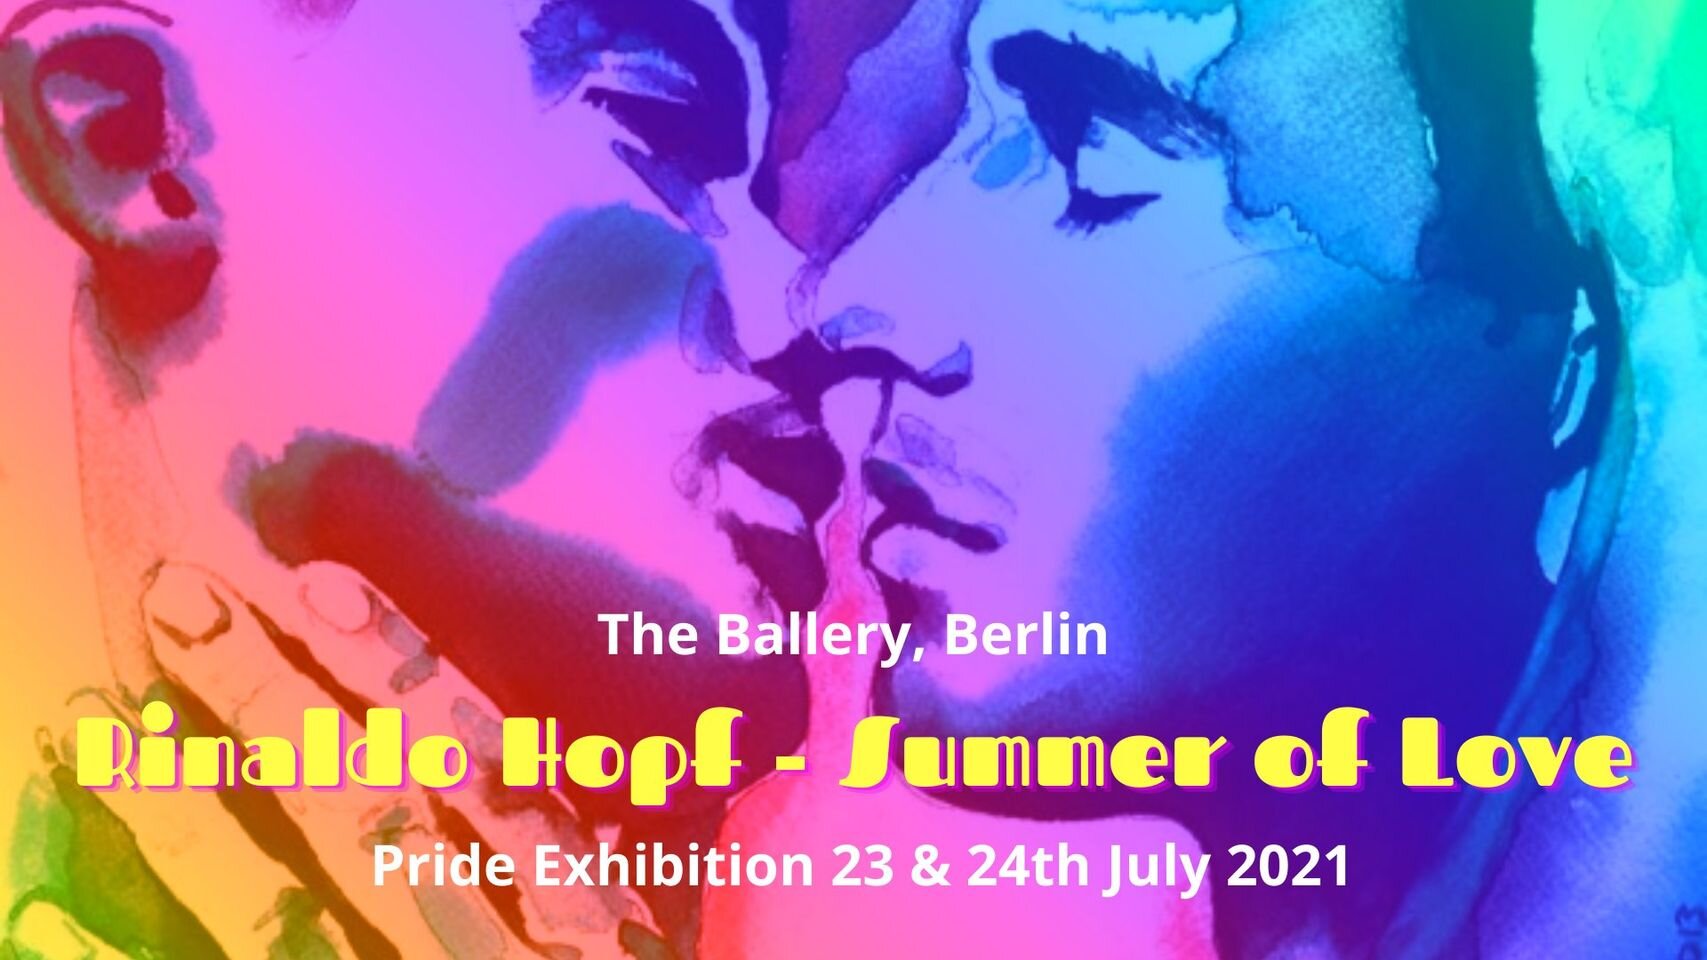 SUMMER OF LOVE - THE BALLERY, BERLIN